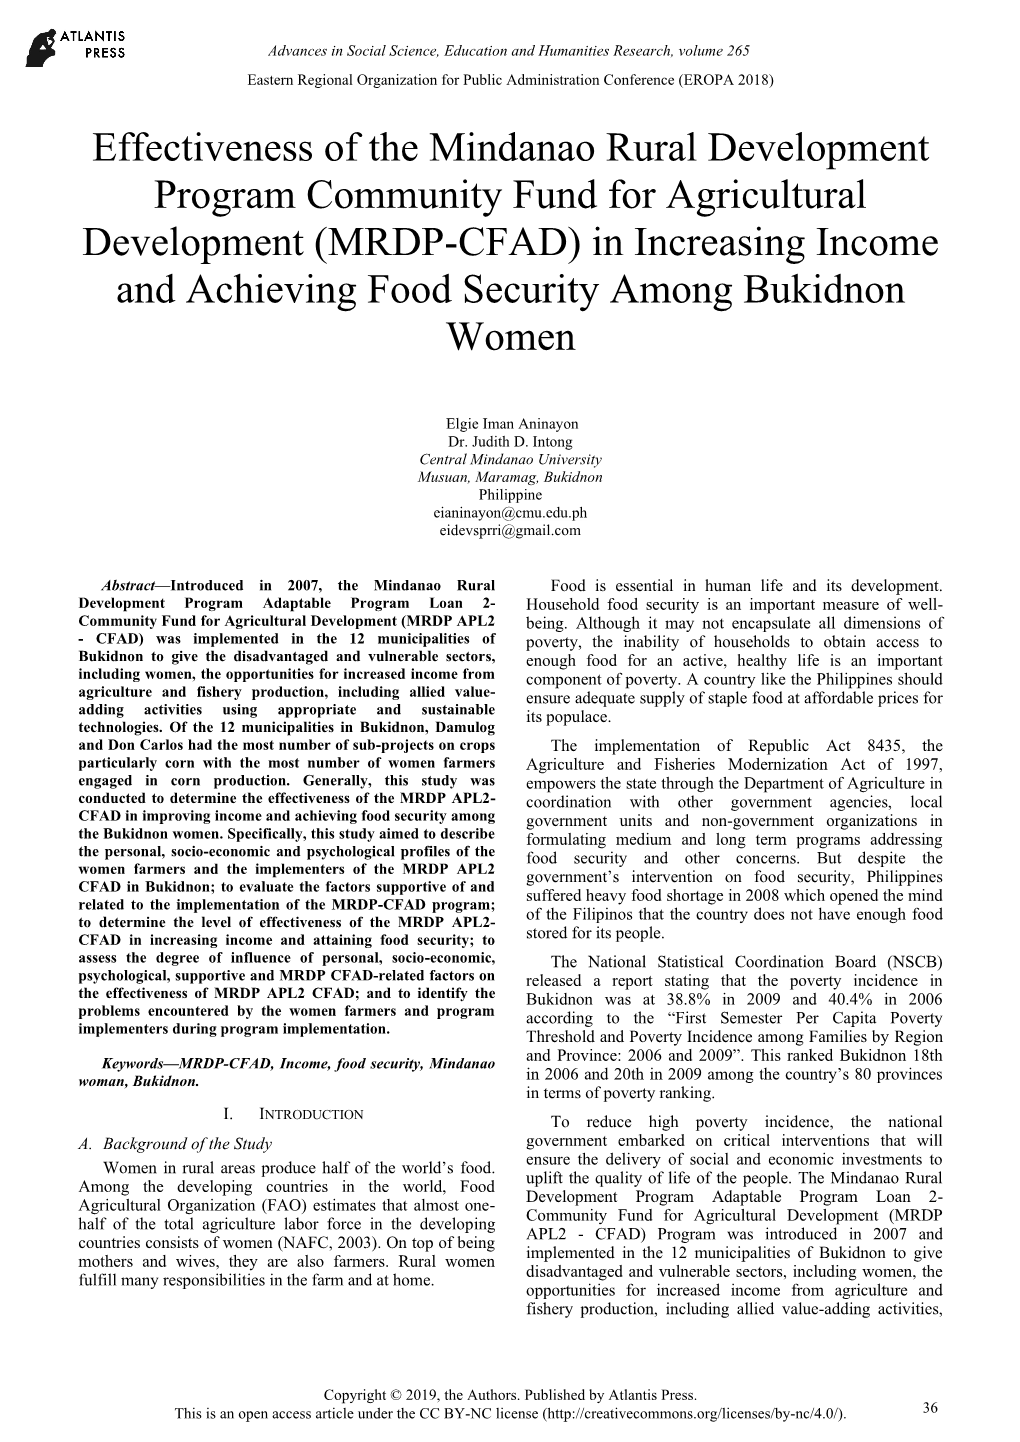 Effectiveness of the Mindanao Rural Development Program Community